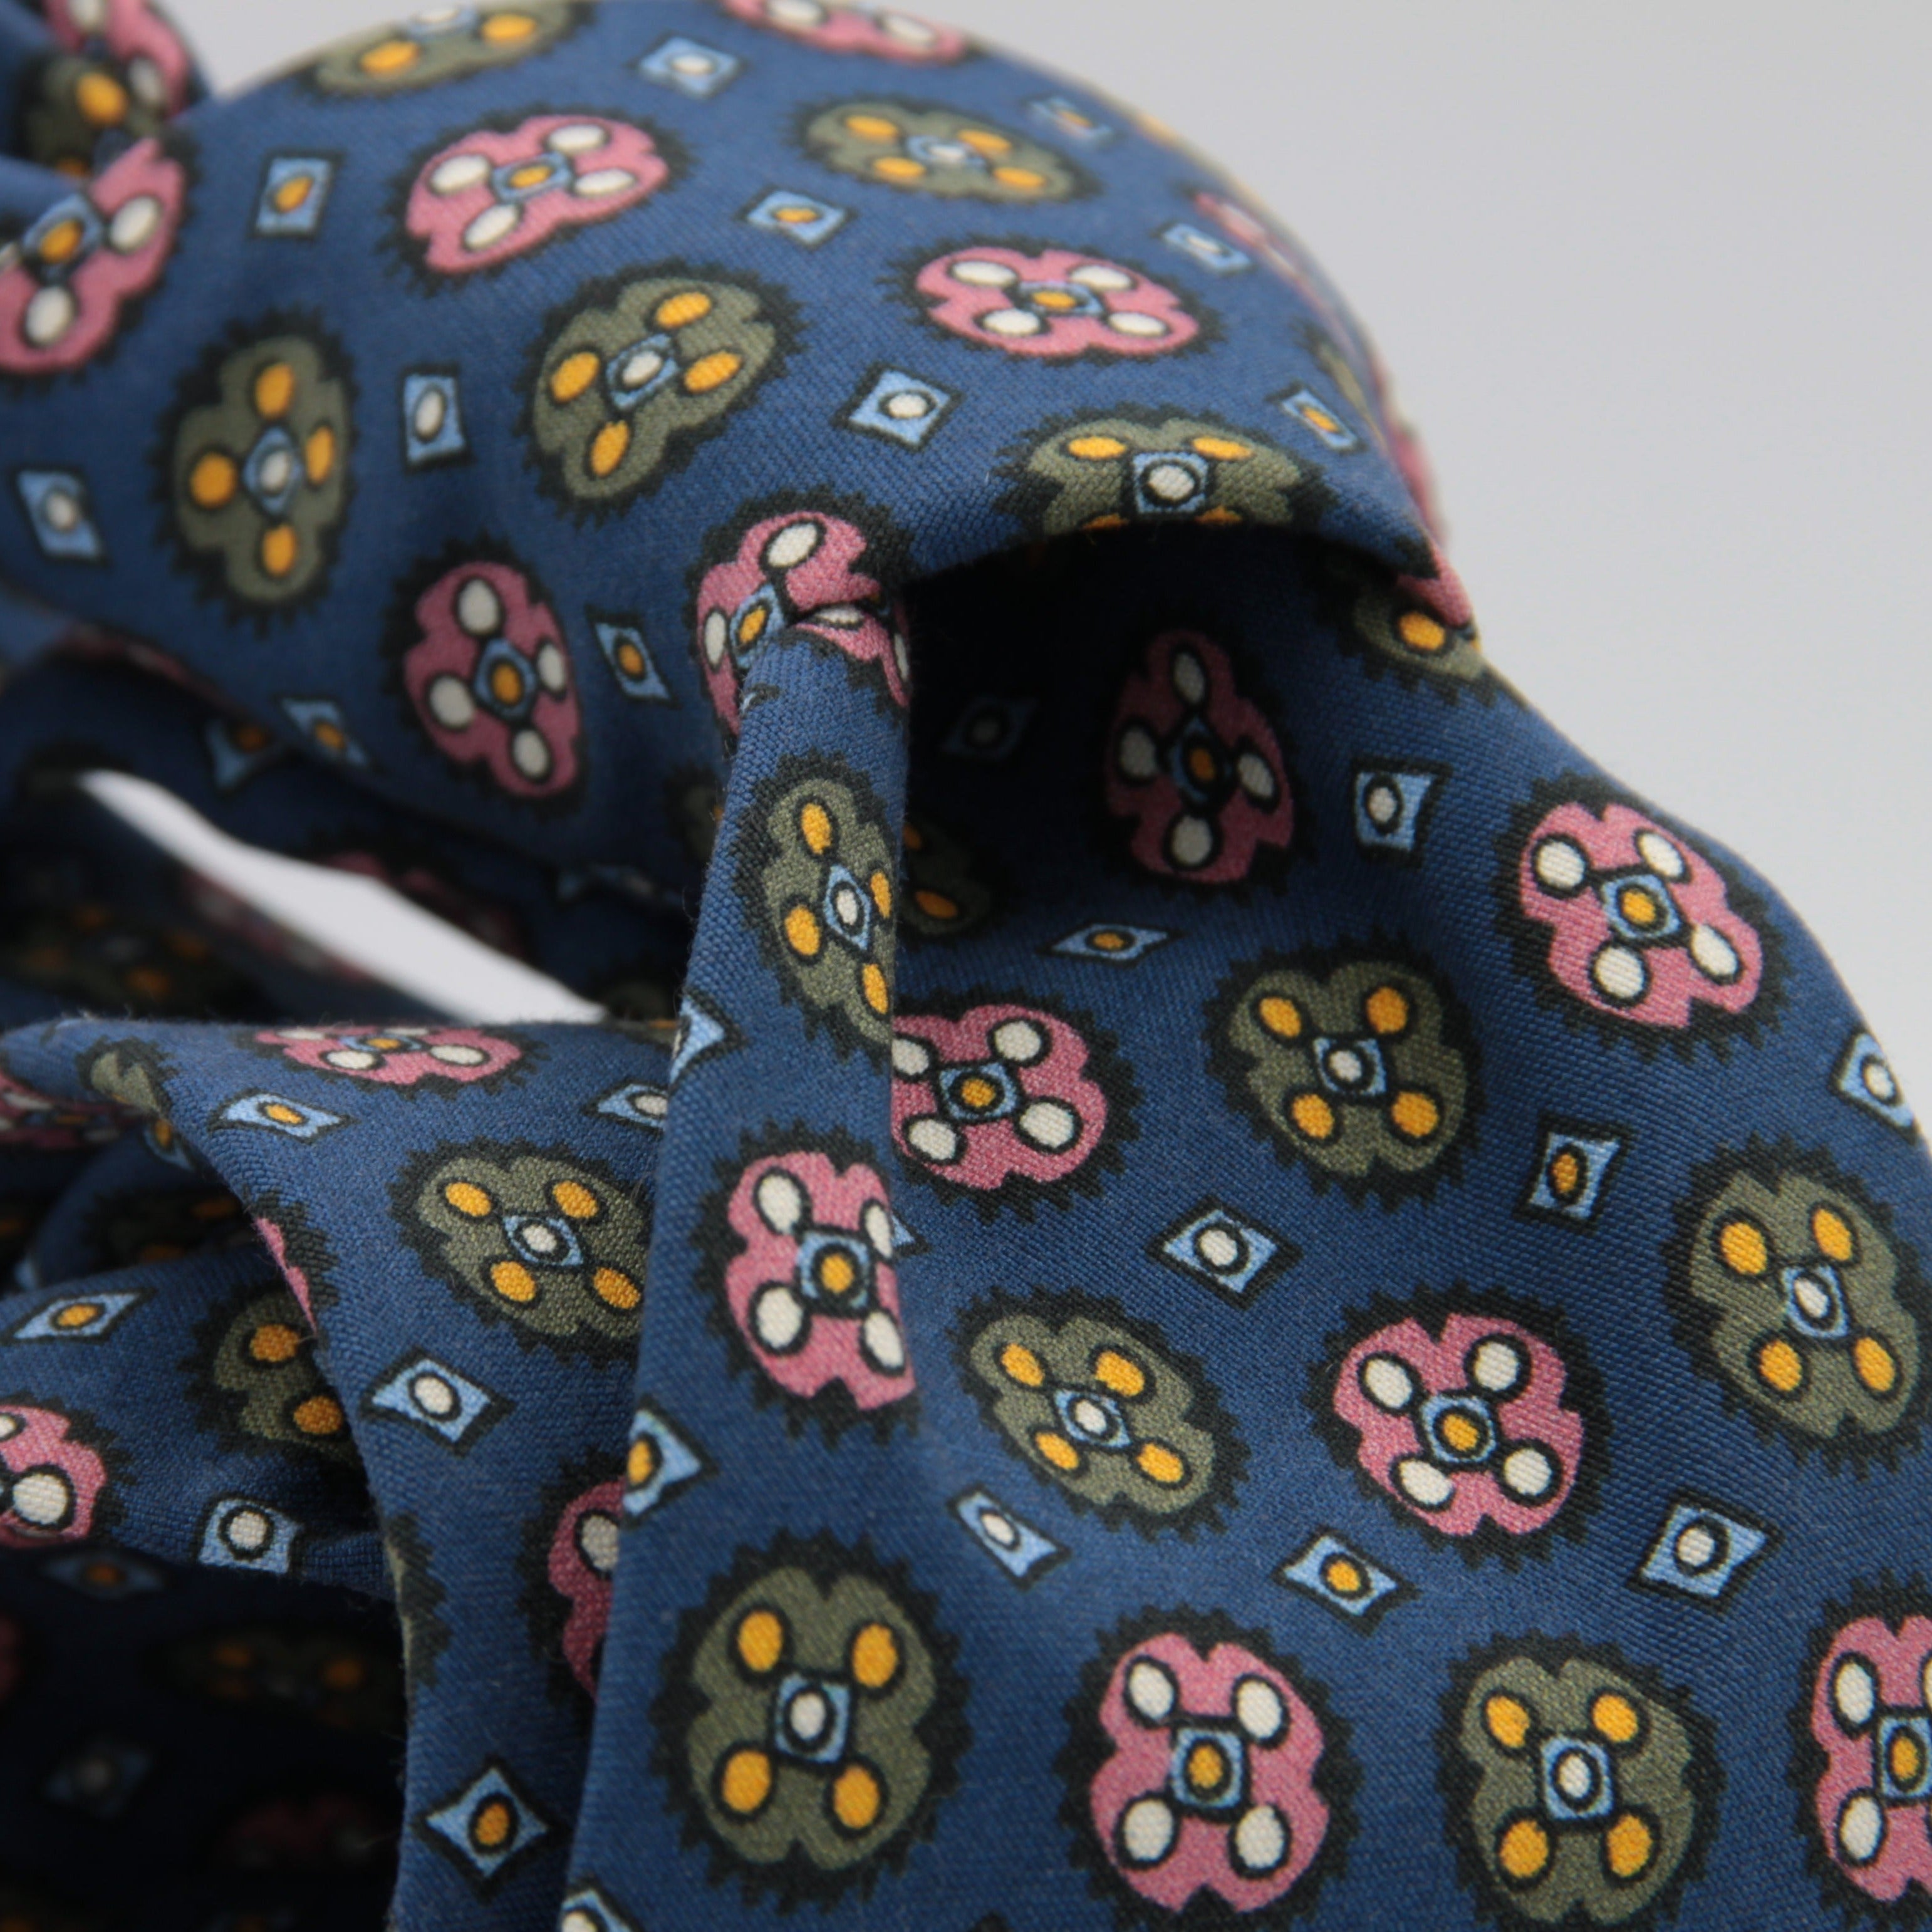 Cruciani & Bella 100% Printed Madder Silk  Italian fabric Unlined tie Blue, Pink, Military green and Orange Motifs Tie Handmade in Italy 8 cm x 150 cm #7628